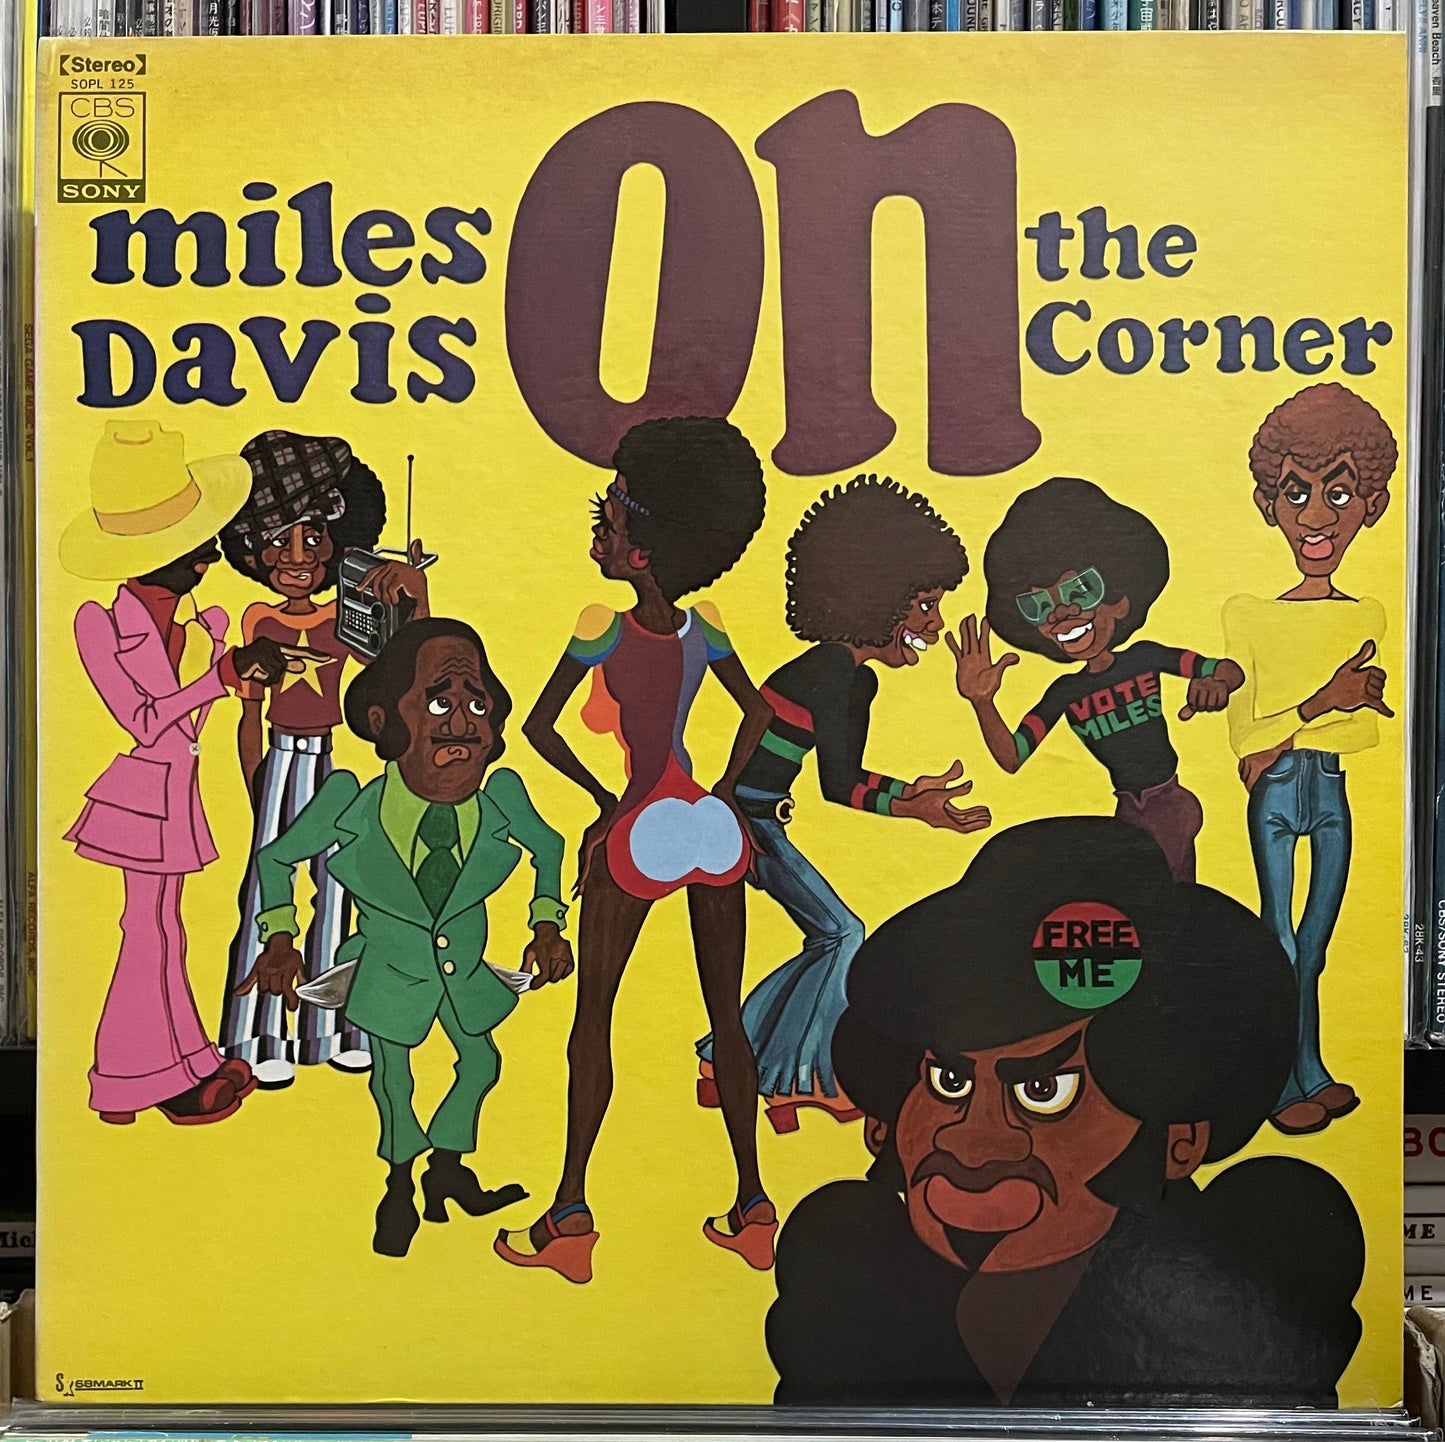 Miles Davis "On The Corner" (1972)